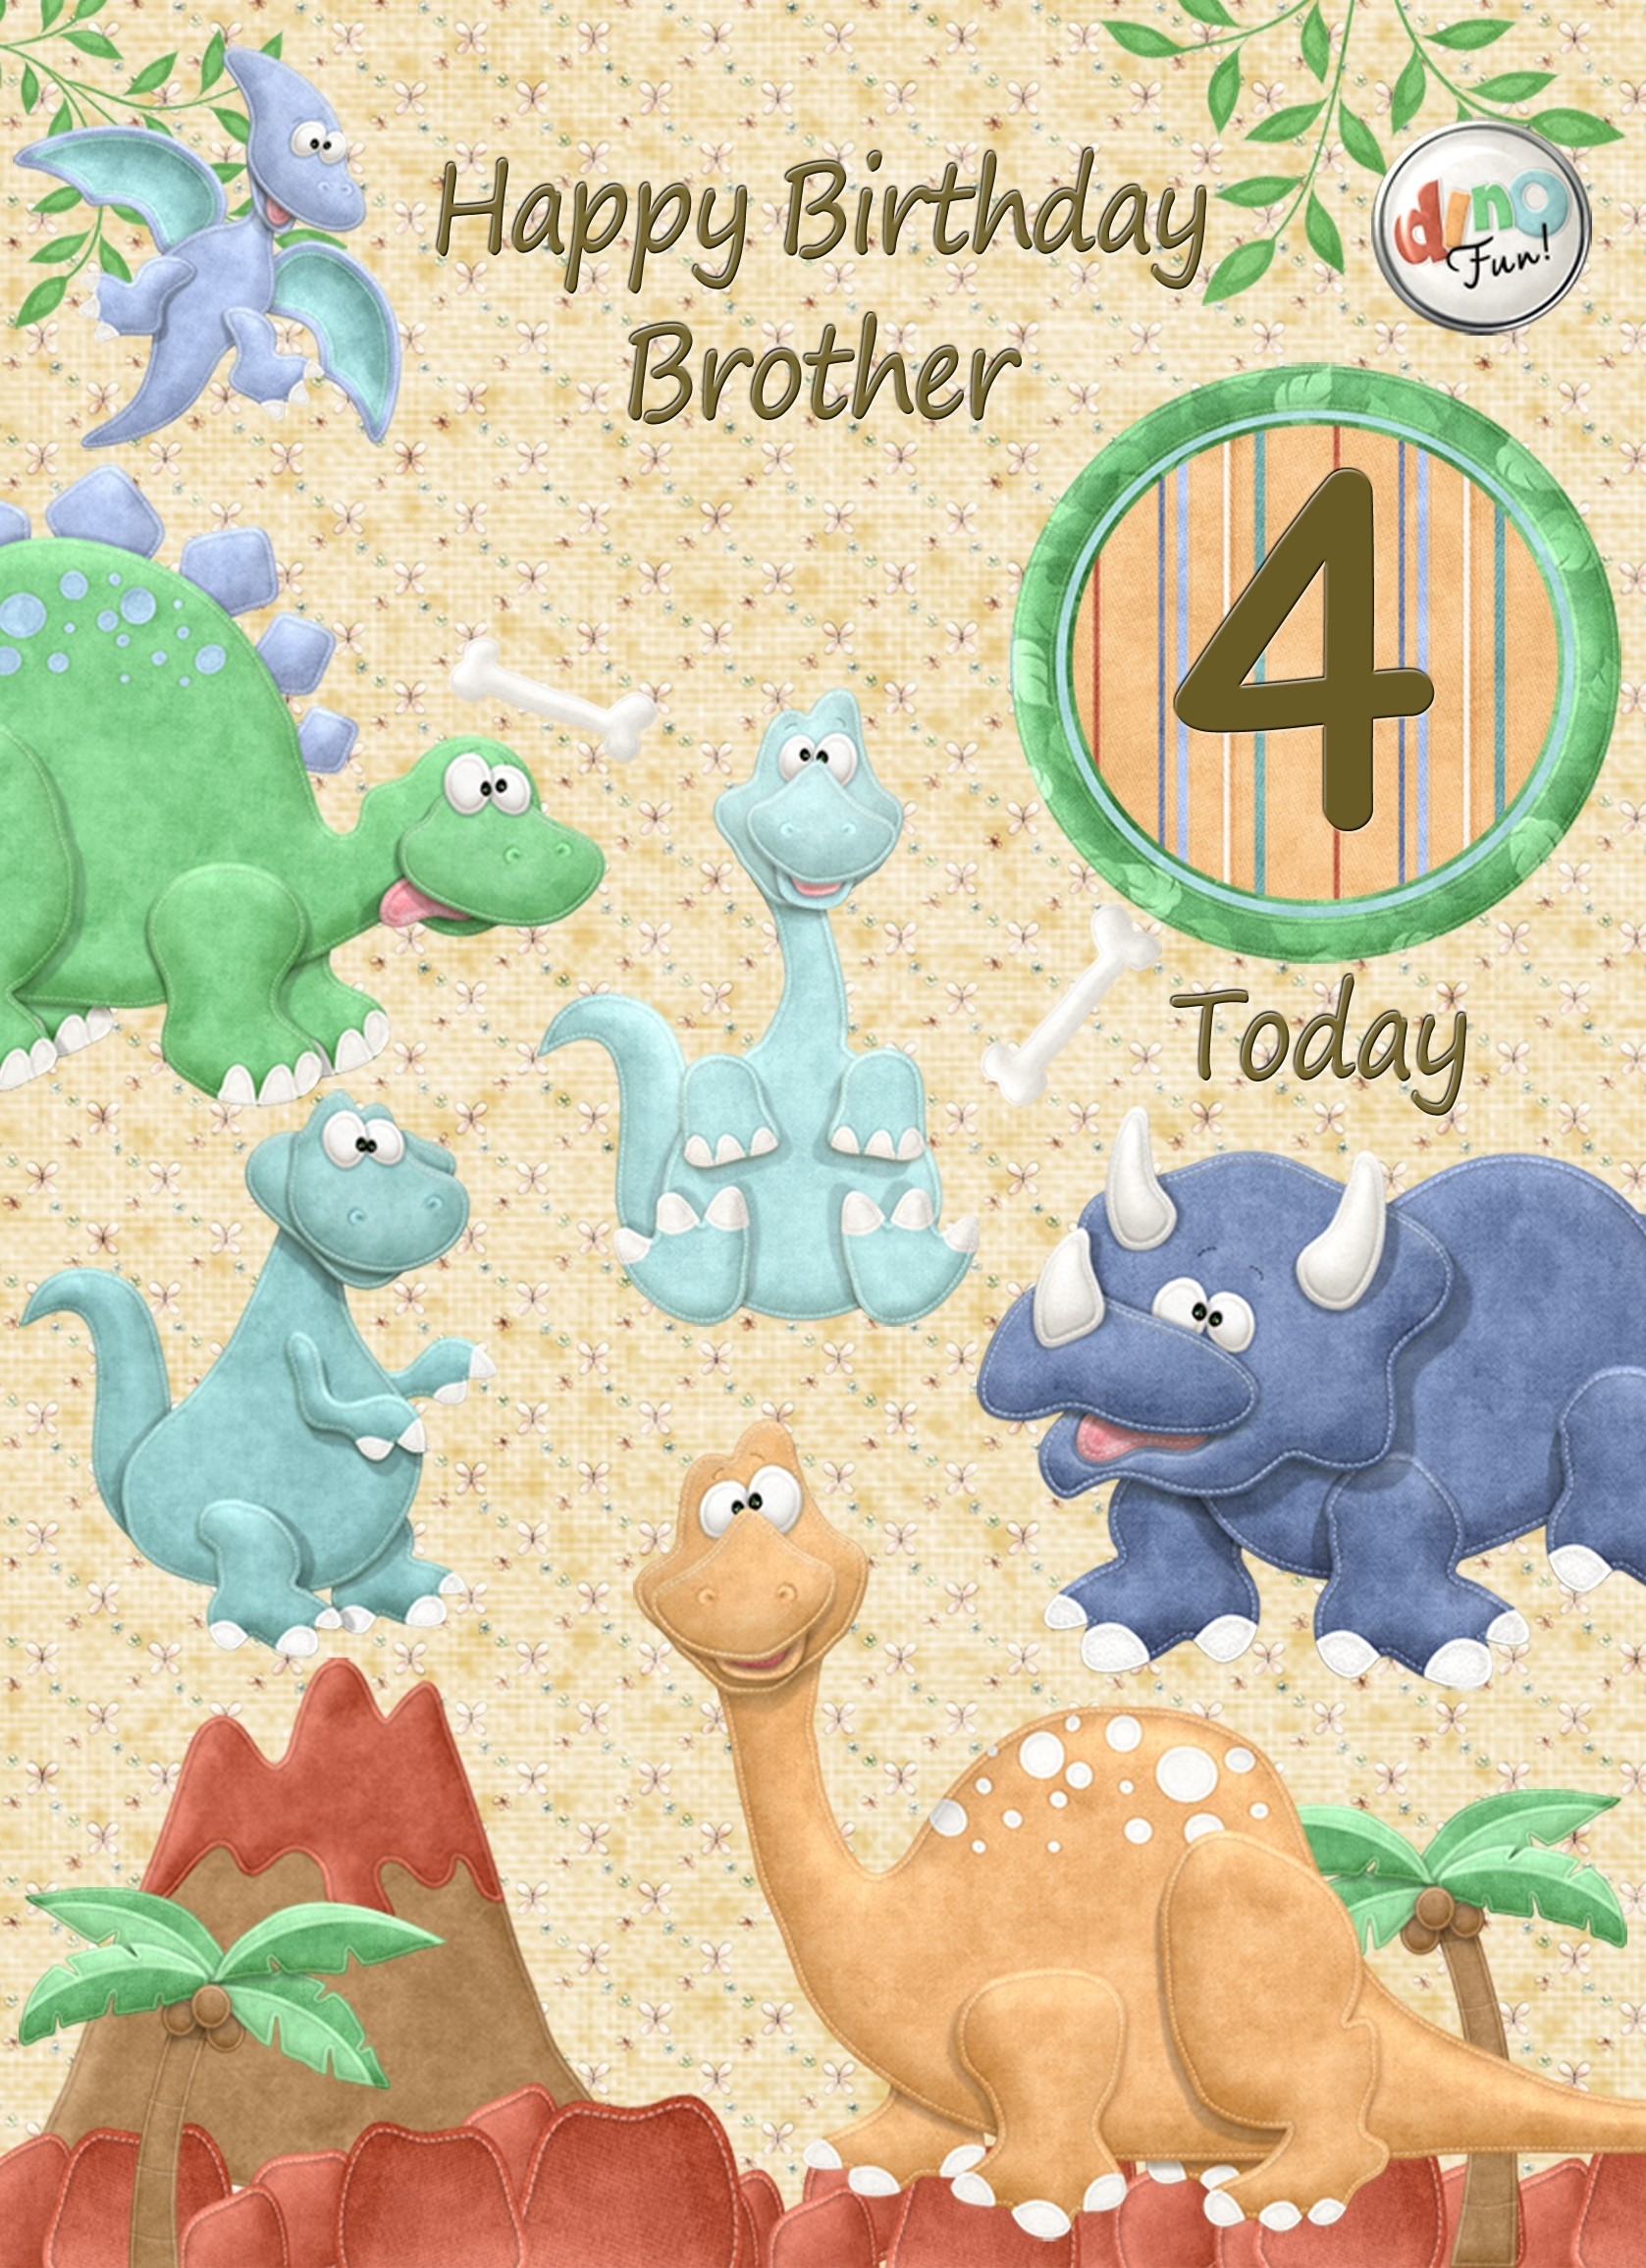 Kids 4th Birthday Dinosaur Cartoon Card for Brother